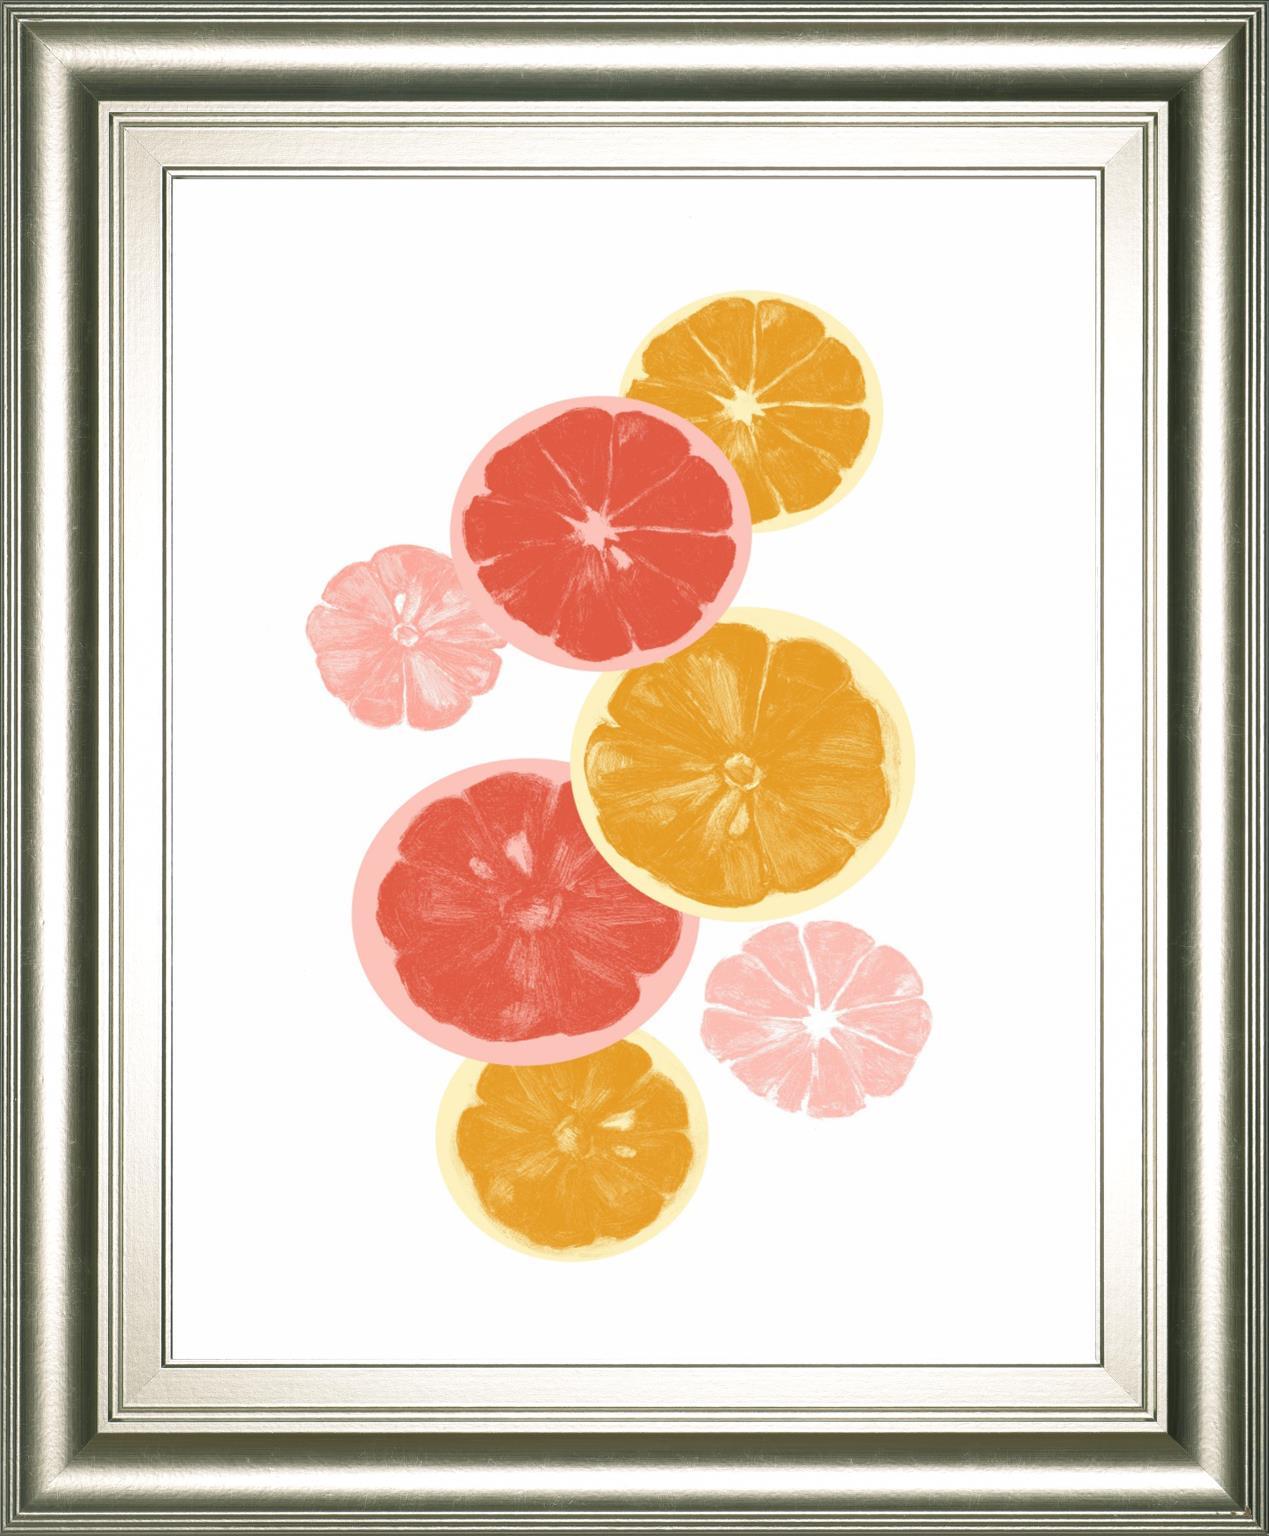 Festive Fruit II By Emma Caroline 22x26 - Orange